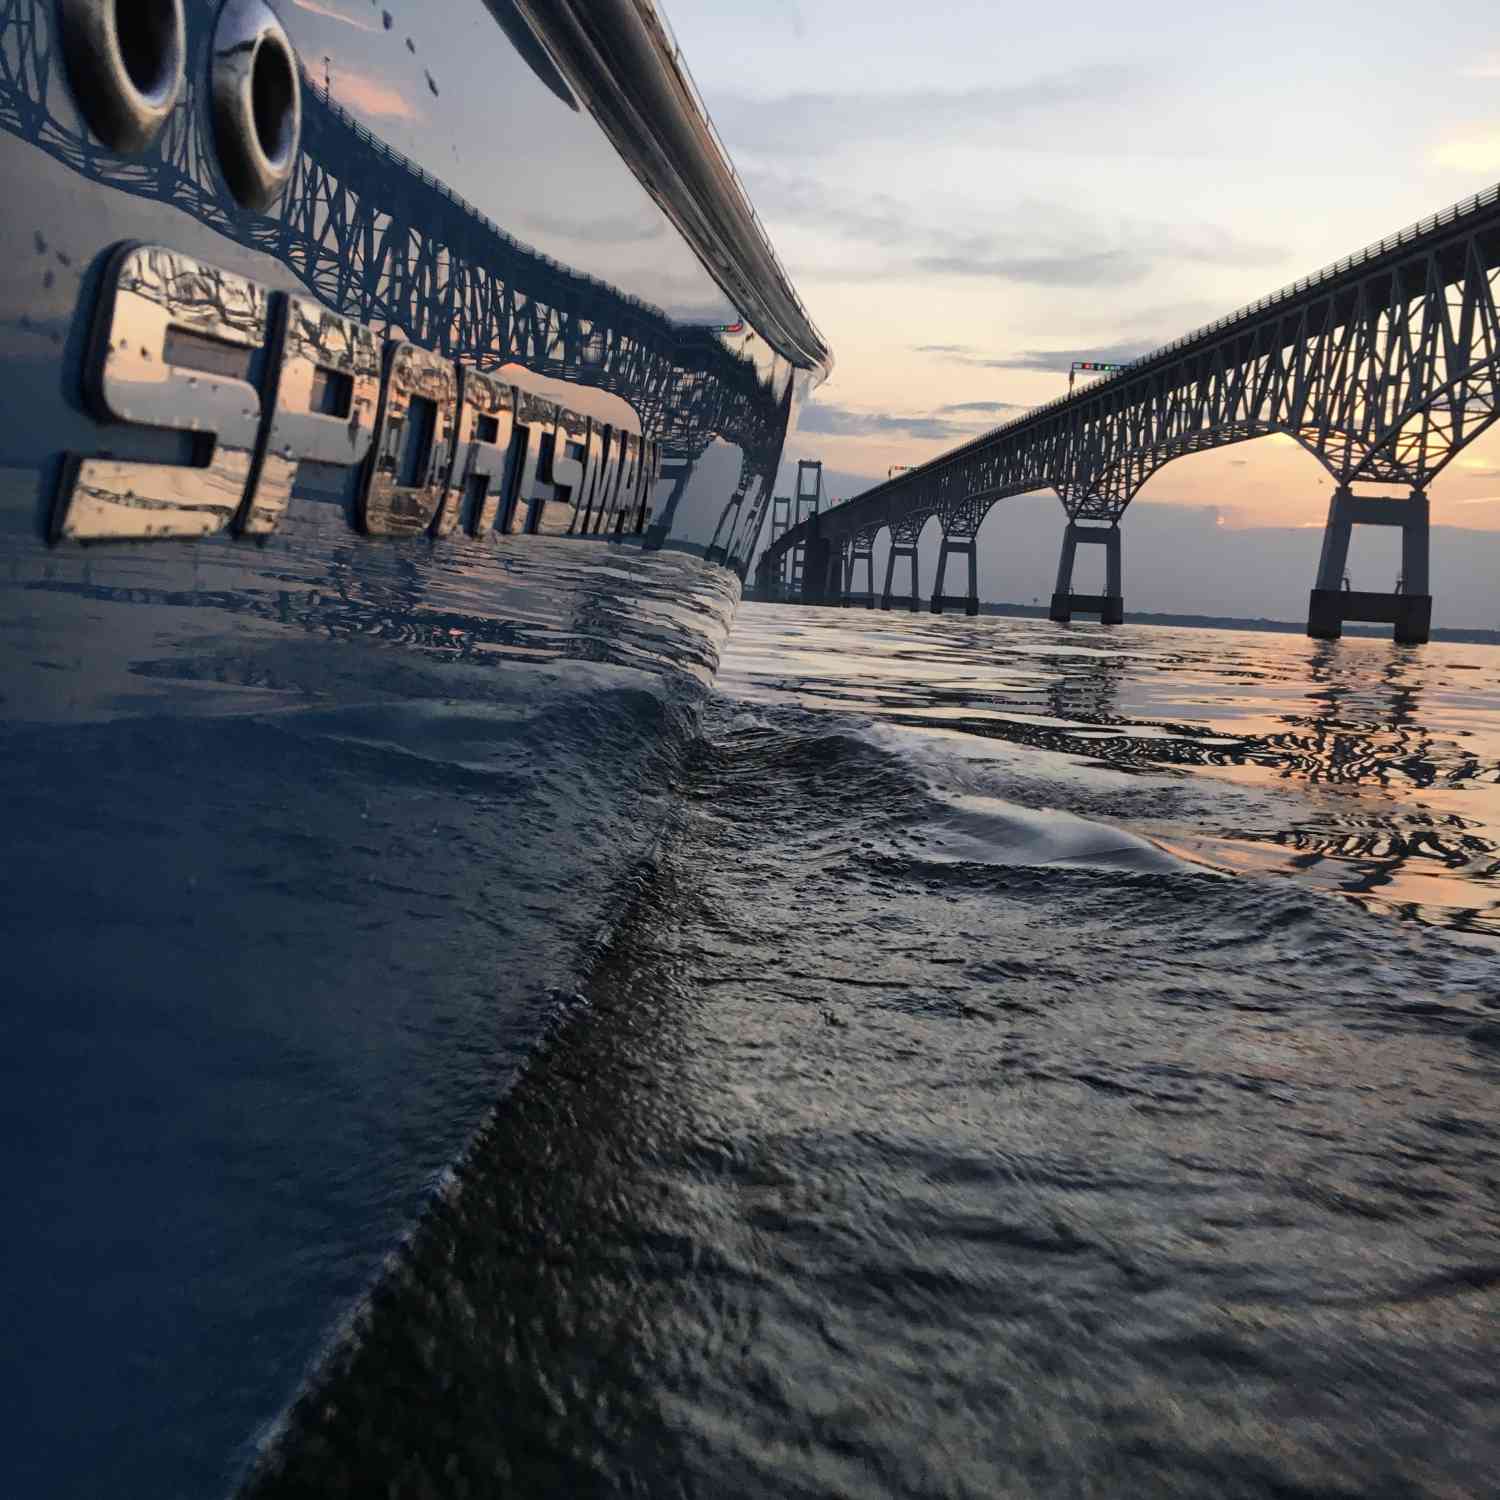 Chesapeake Bay Bridge reflection off an Island Blue 252 open Sportsman with a sunset backdrop